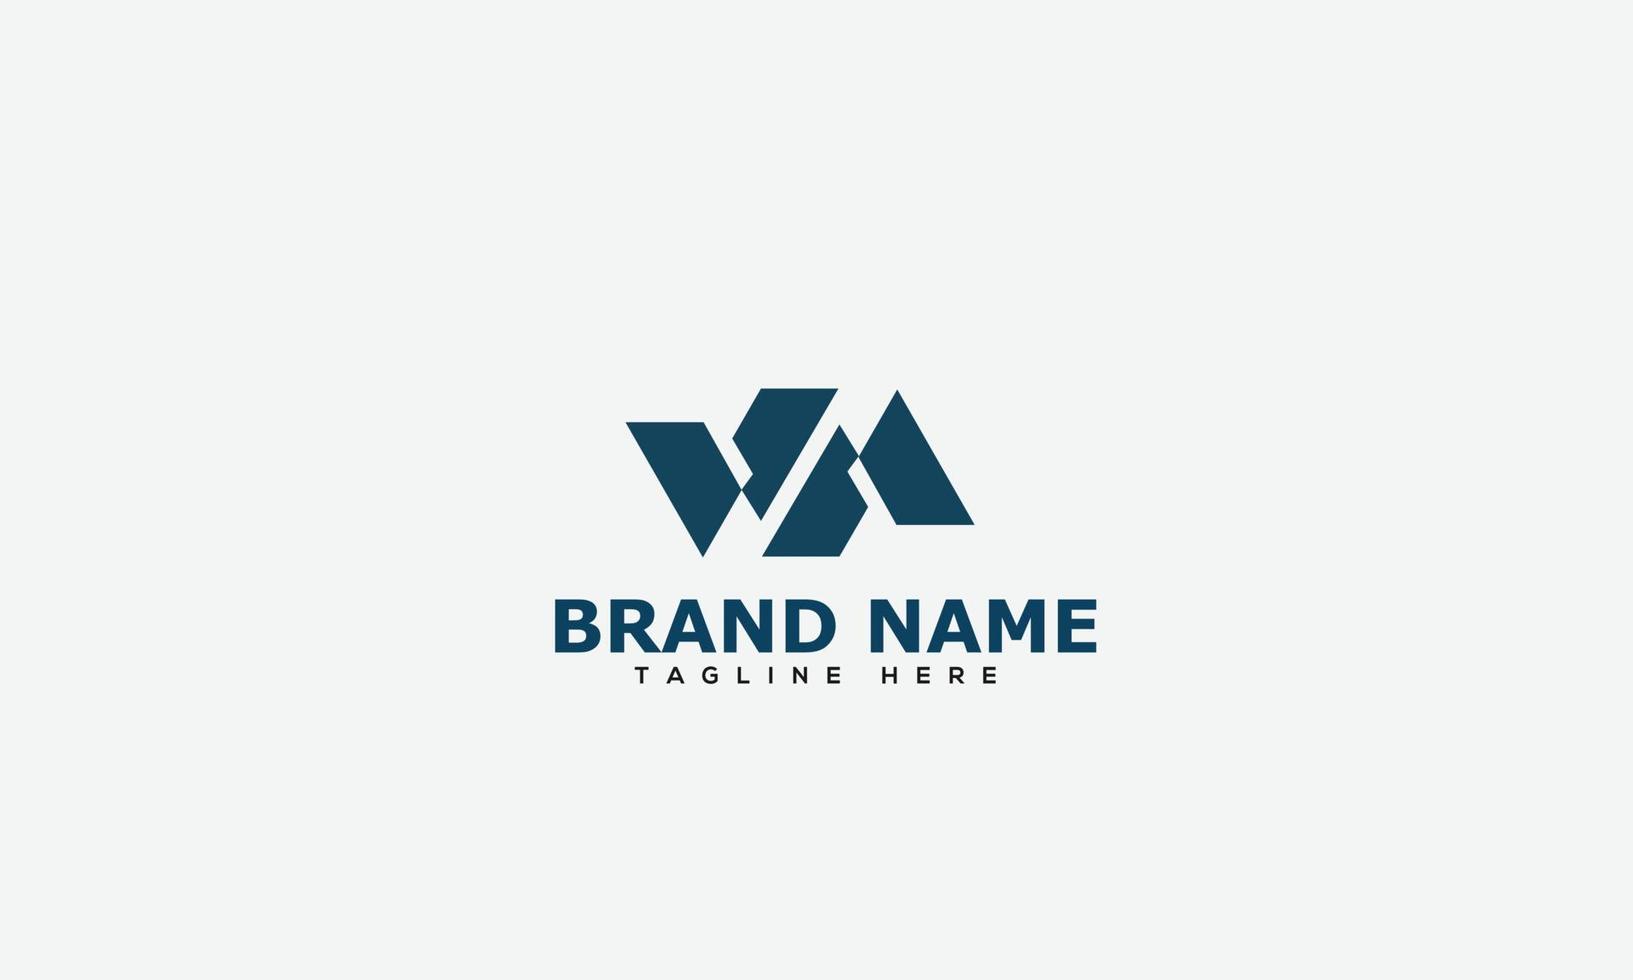 elemento de branding gráfico de vetor de modelo de design de logotipo wm.